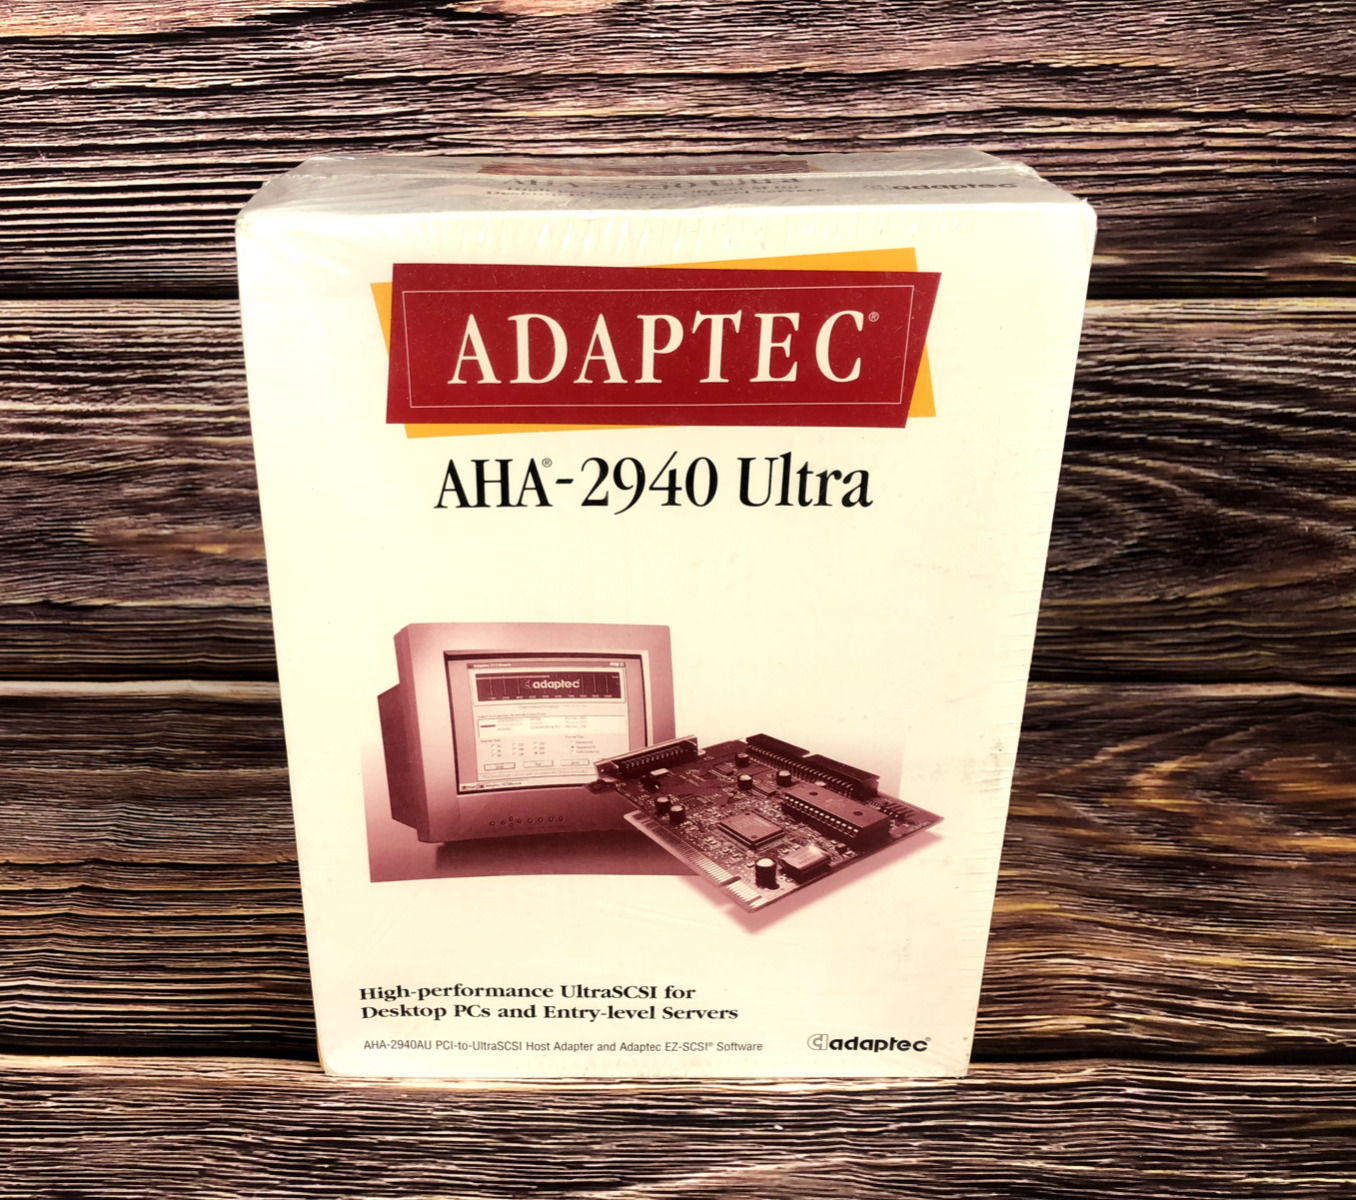 ADAPTEC AHA-2940 Ultra High-performance UltraSCSI PCs and Entry Servers 1996 NOS